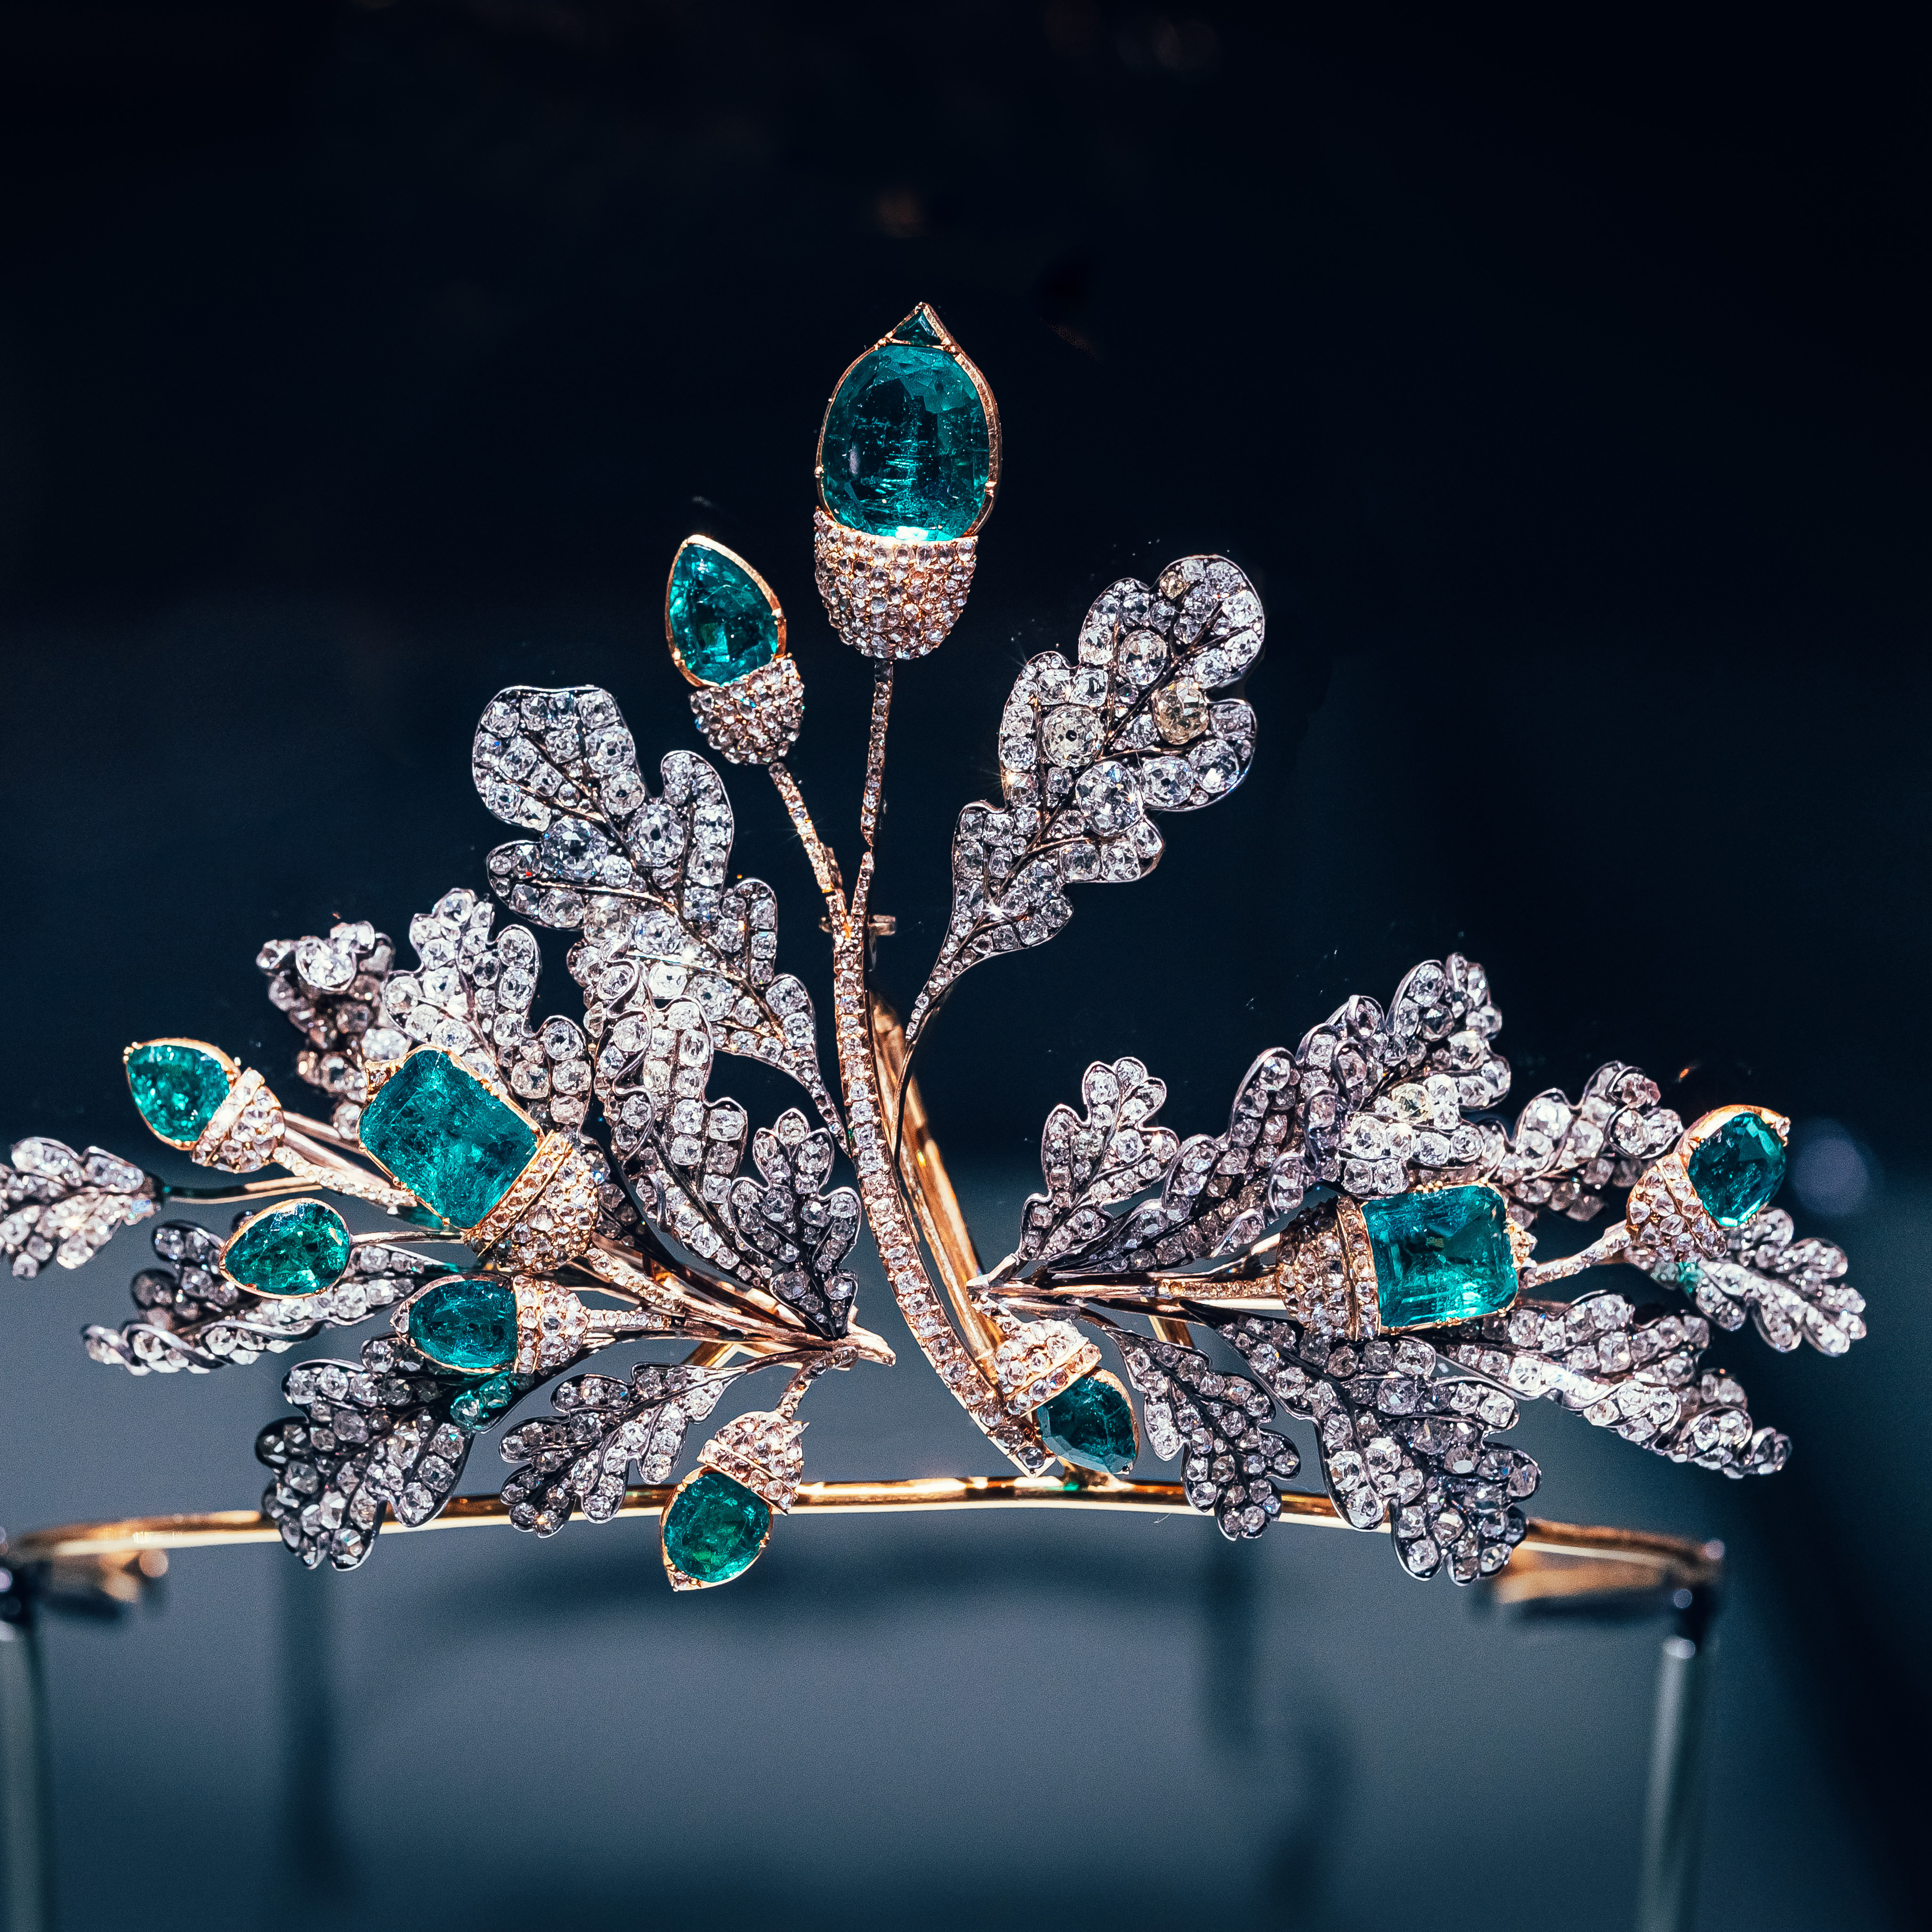 Chaumet reveals new high jewellery Le Jardin de Chaumet